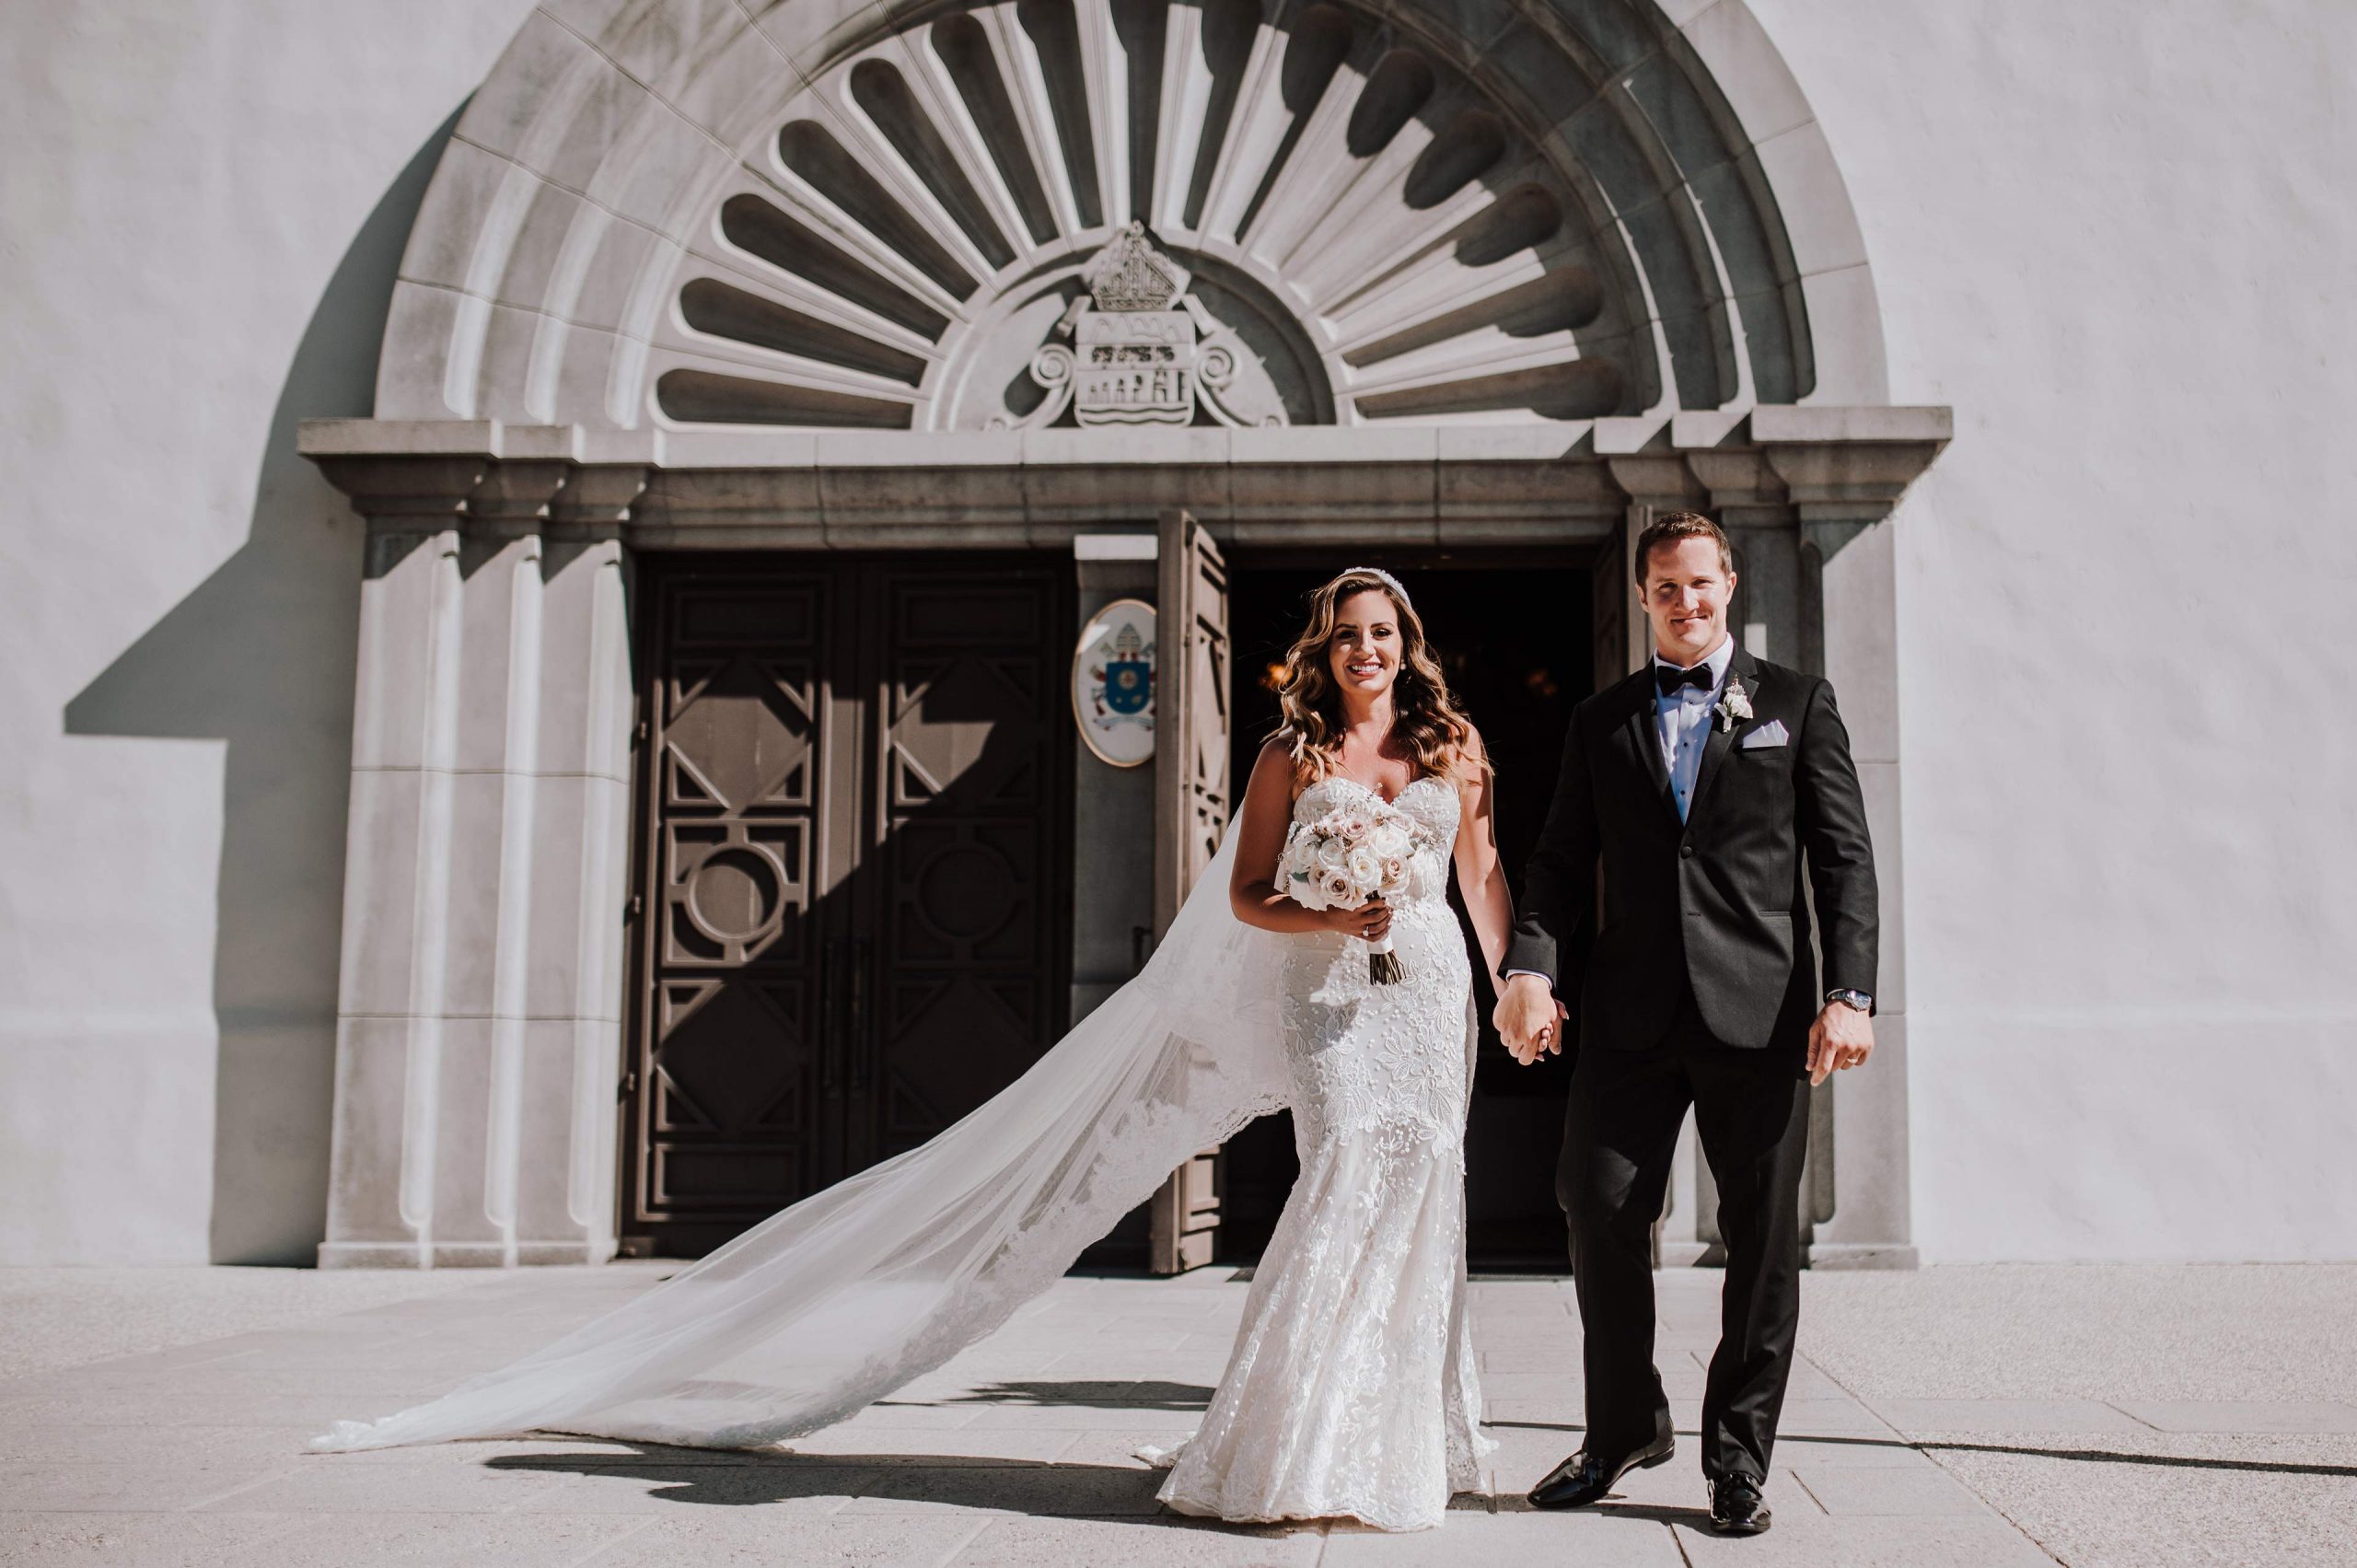 Mission Basilica San Juan Capistrano Wedding - wedding photography in California - 6